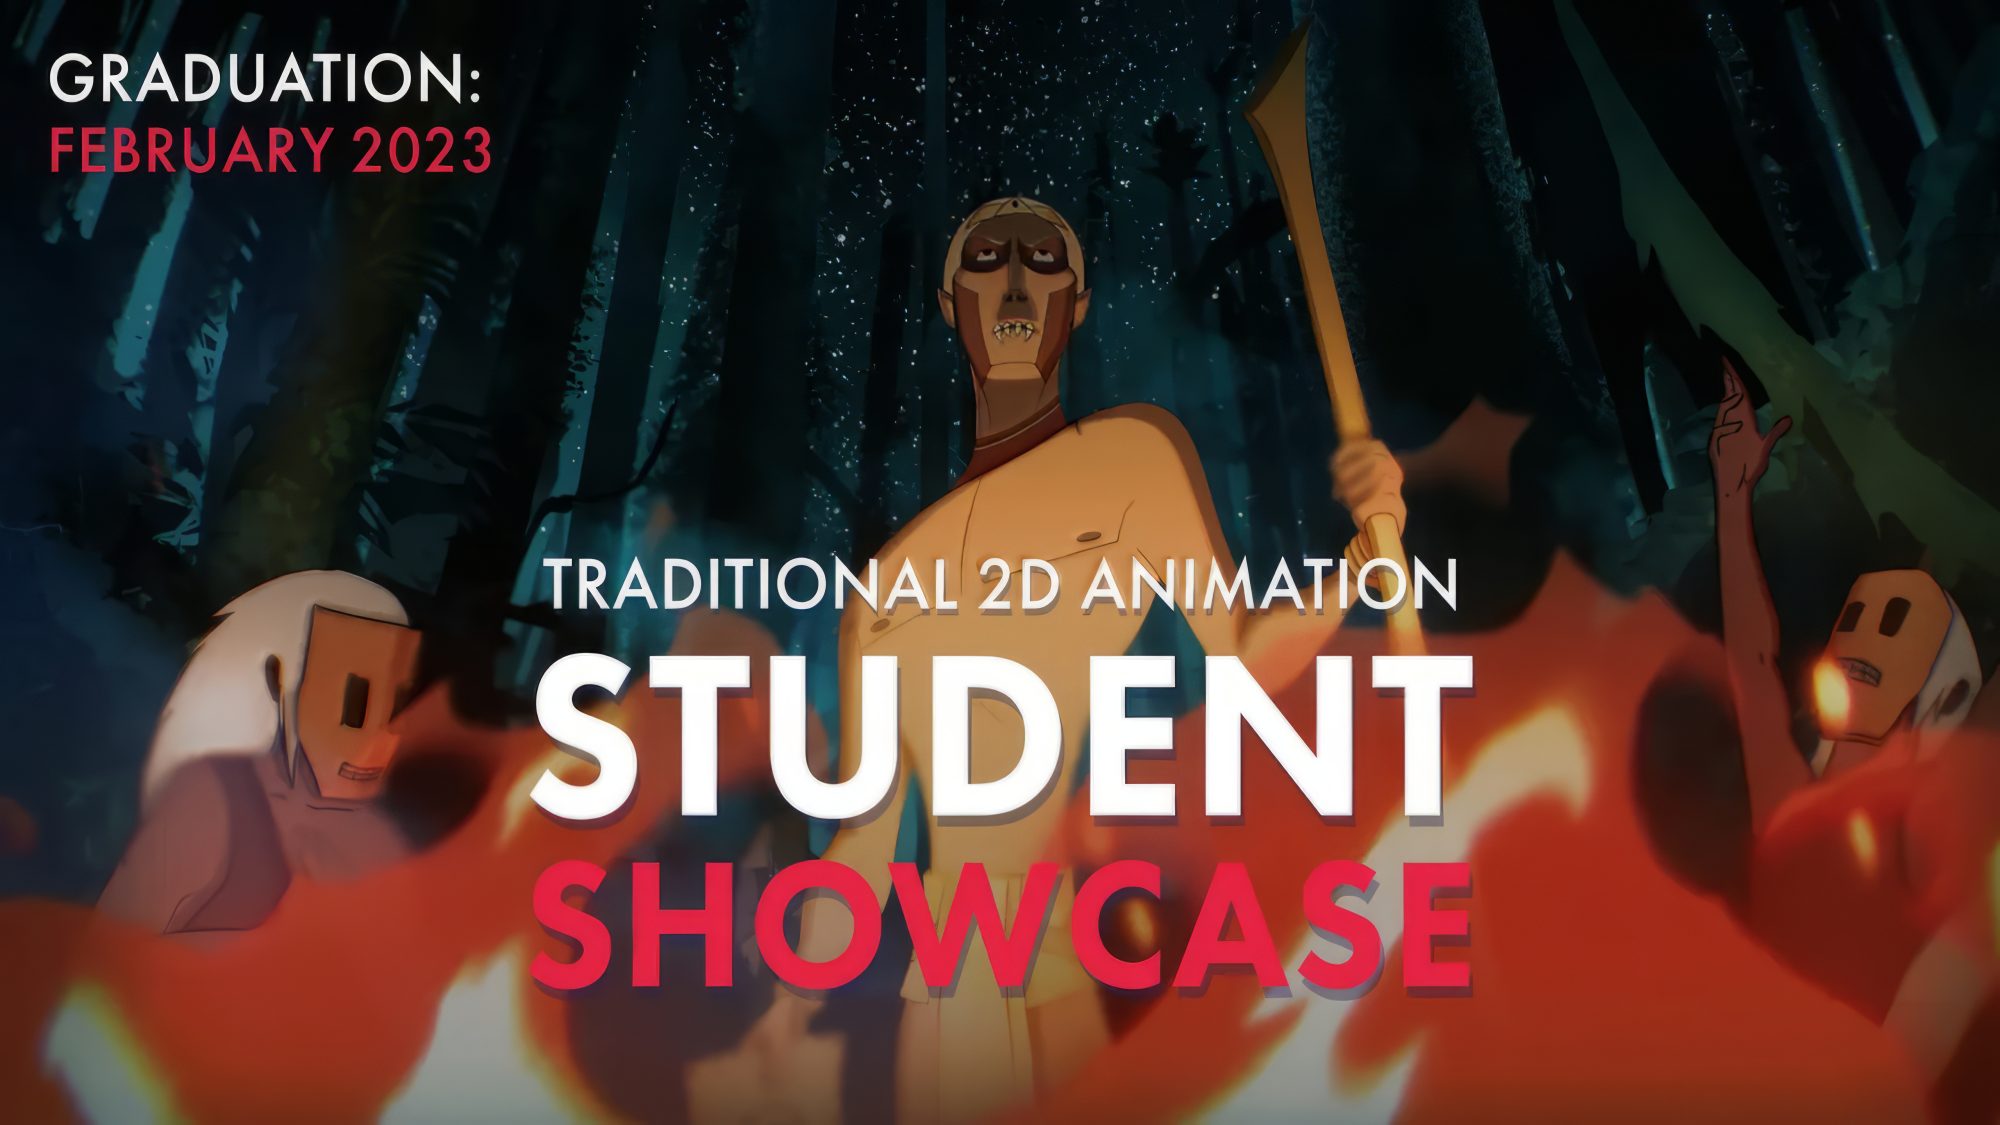 Students showcase. Traditional 2D animation. Graduation: February 2023